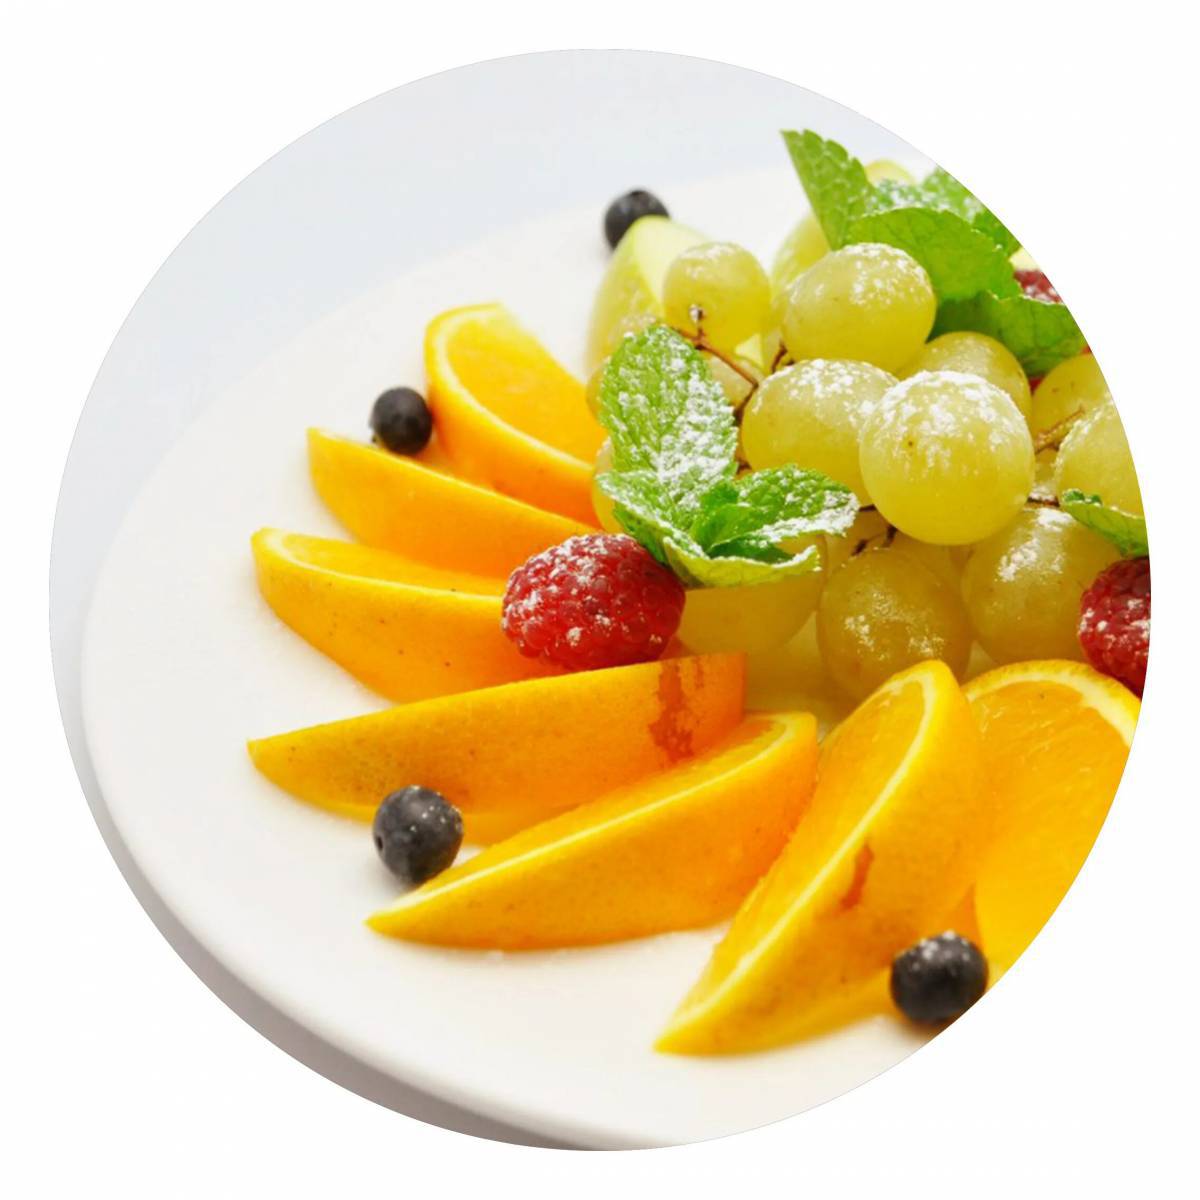 Тарелка с фруктами #11